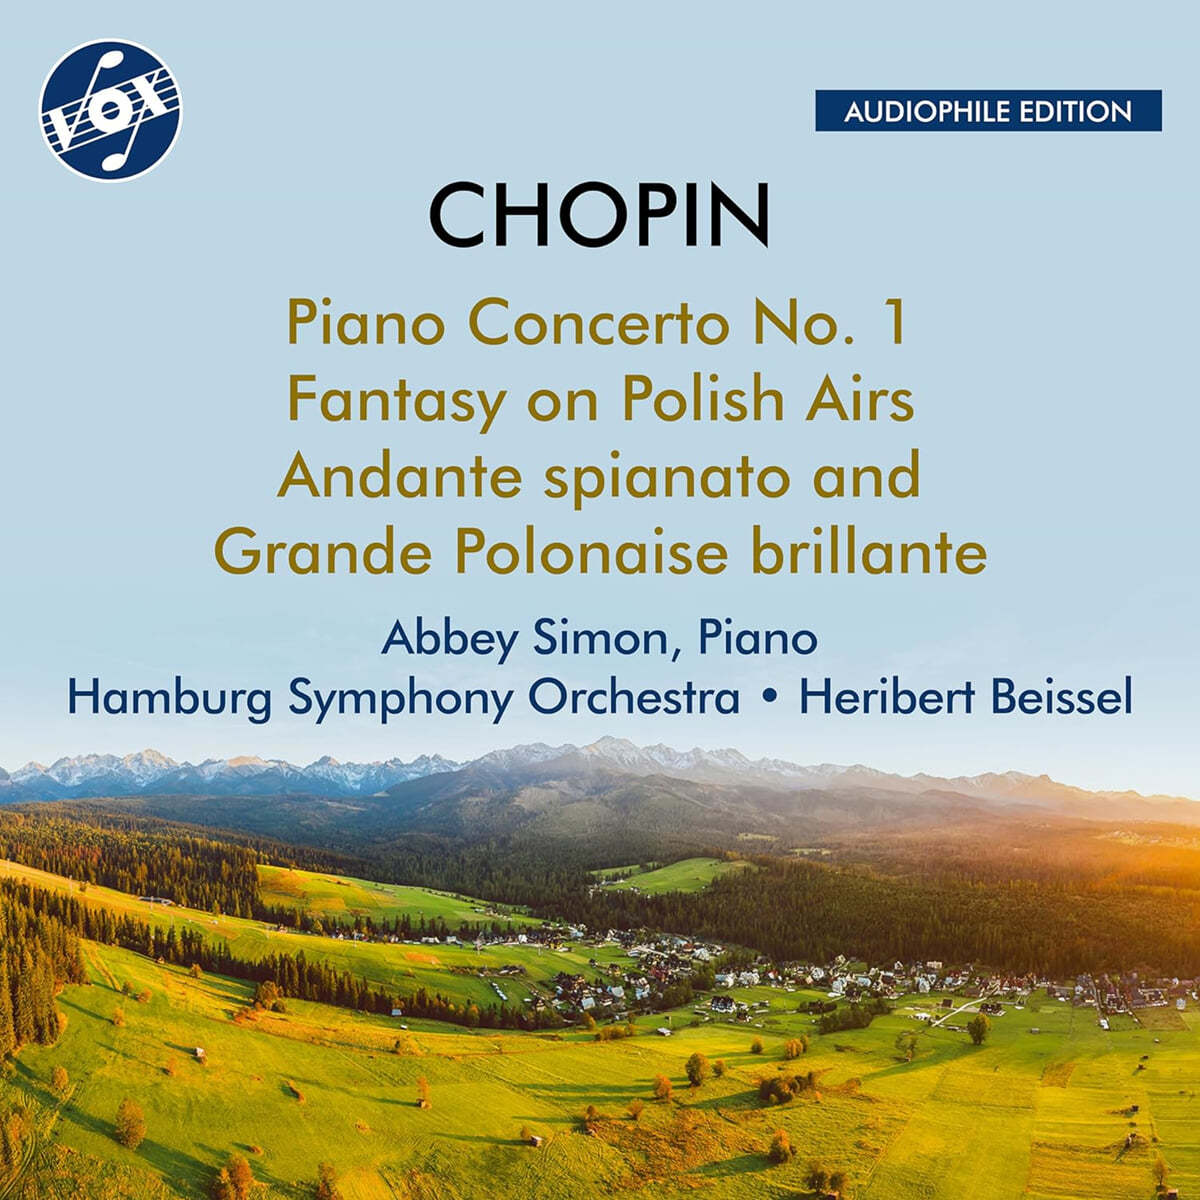 Abbey Simon 쇼팽: 피아노 협주곡 1번, 폴란드 노래에 의한 환상곡 외 (Chopin)